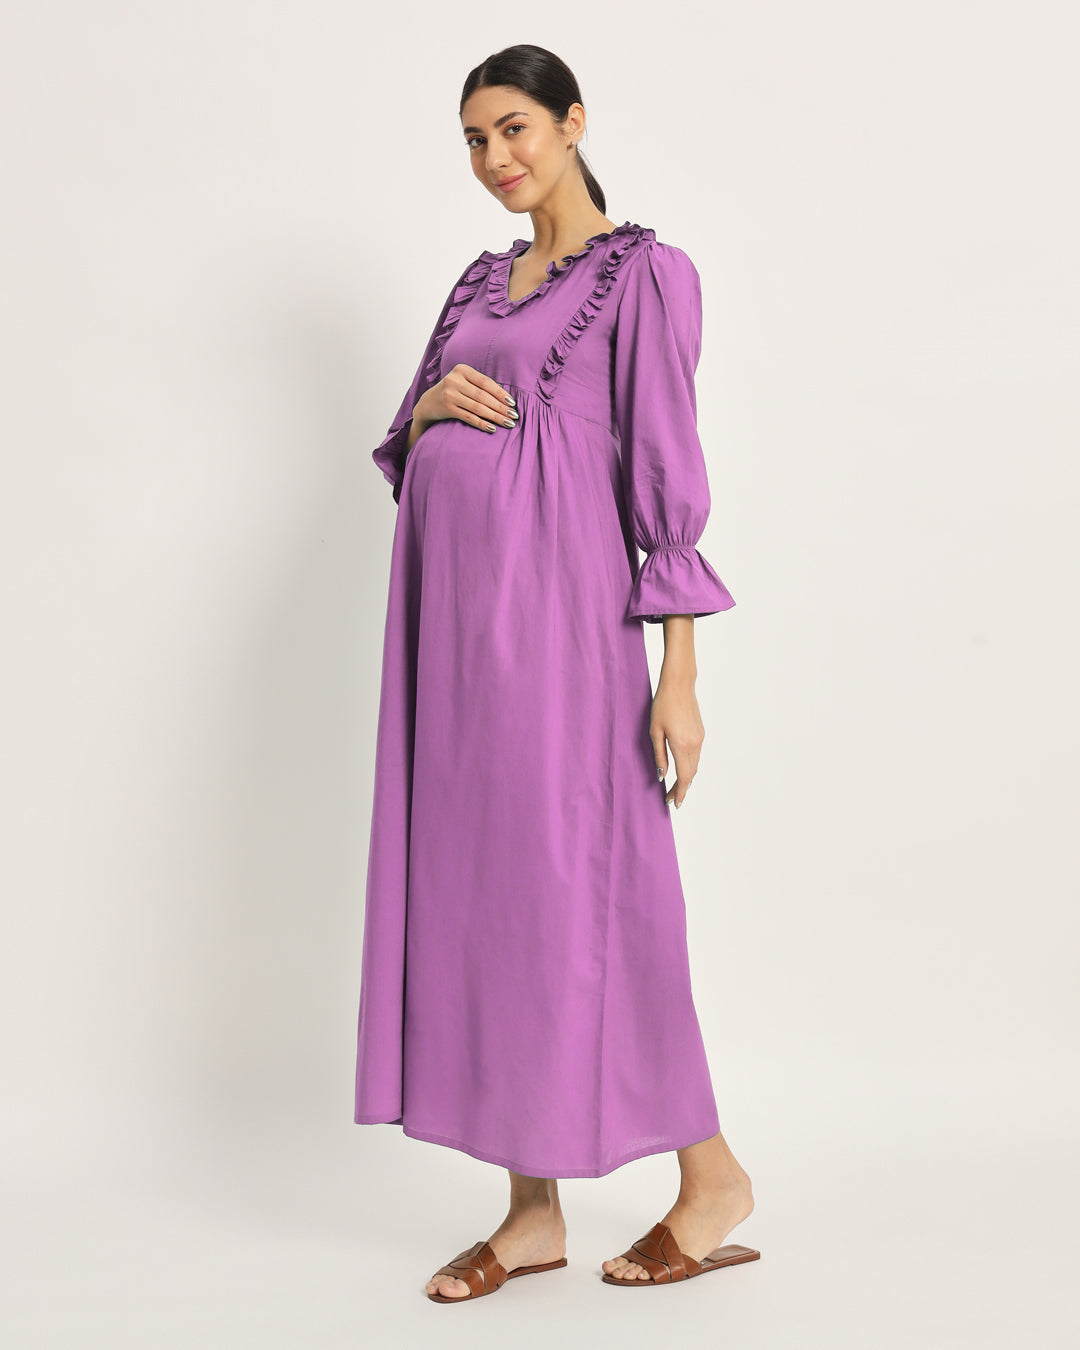 Combo: Lilac & Wisteria Purple Functional Flow Maternity & Nursing Dress - Set of 2